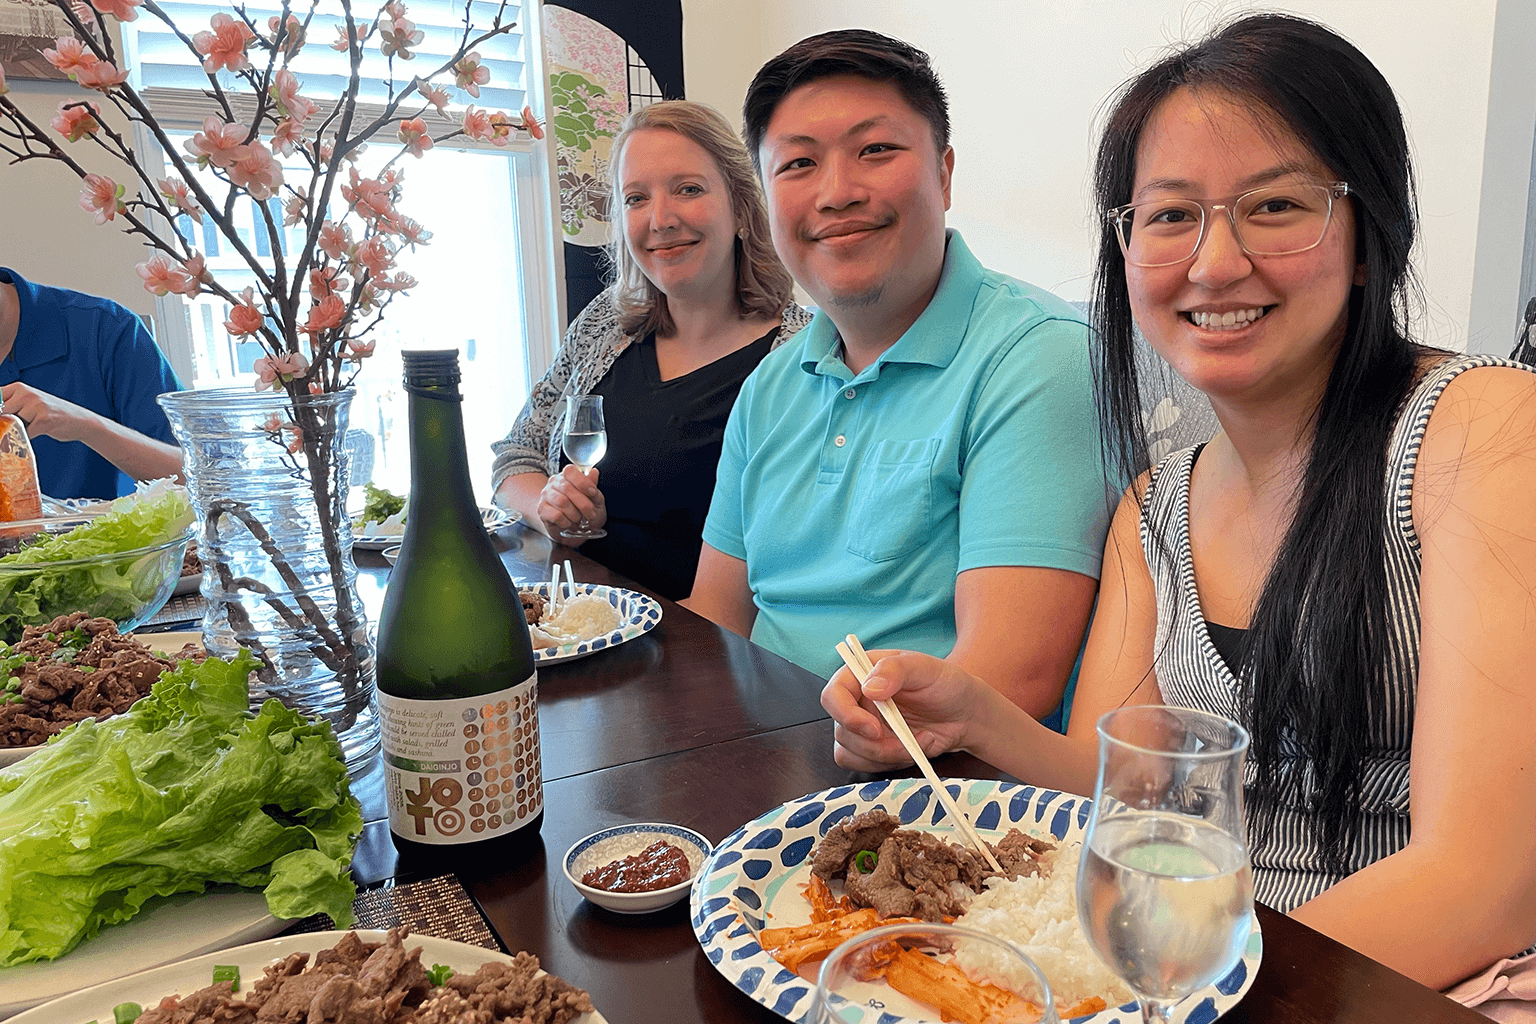 Erin, Alen and Ann agree that Korean bulgogi and sake is a yummy combination.